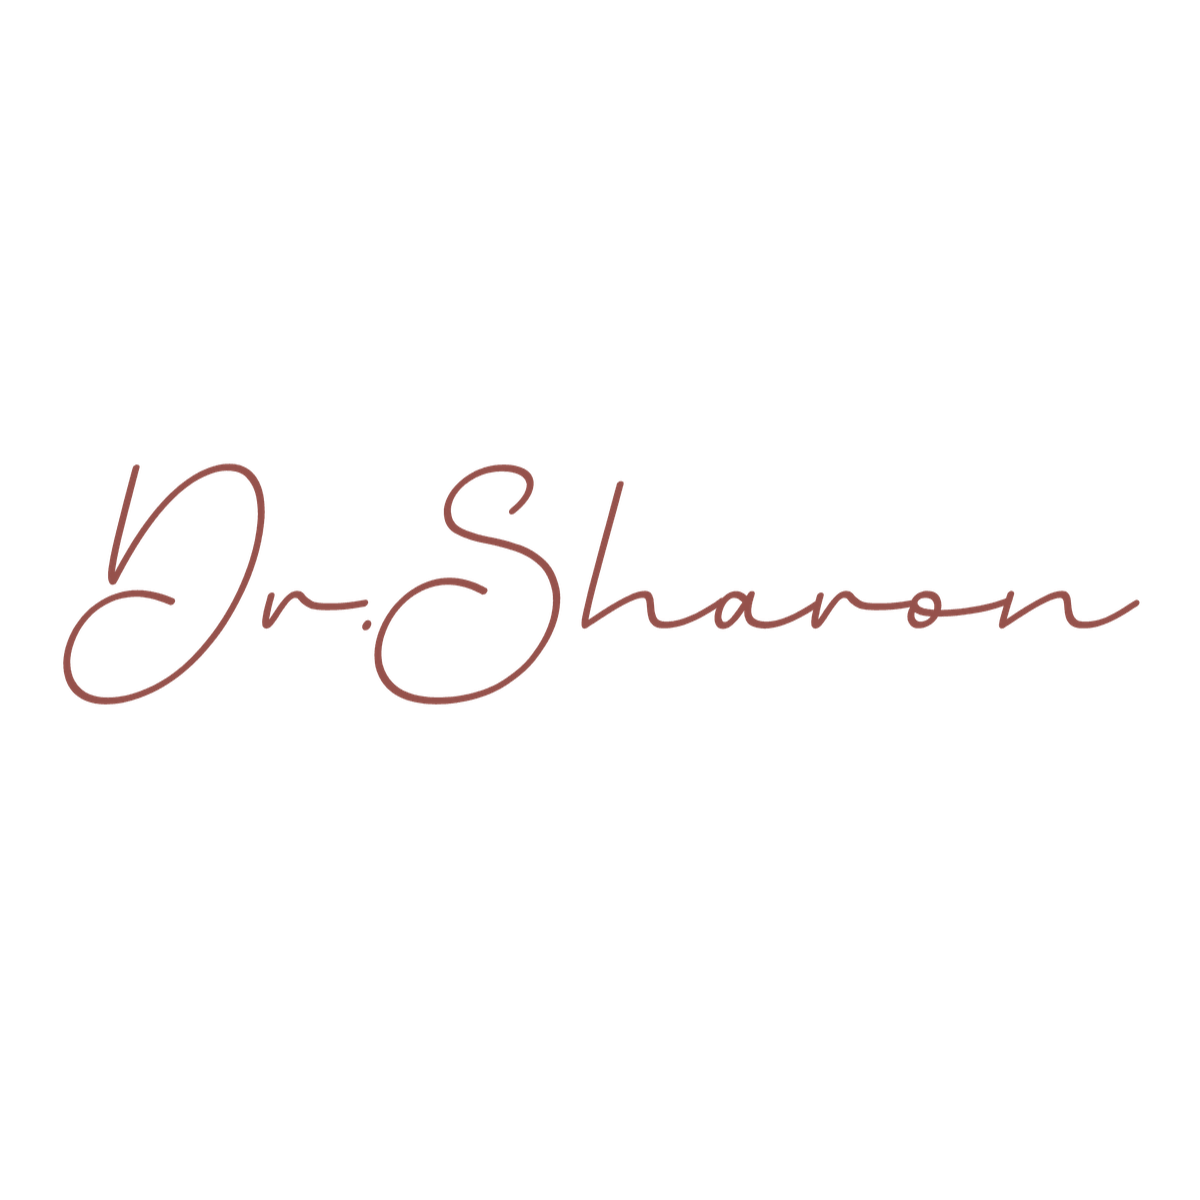 Dr. Sharon Aesthetics Wellness & IV Drip Bar - Houston, TX 77055 - (832)270-9241 | ShowMeLocal.com